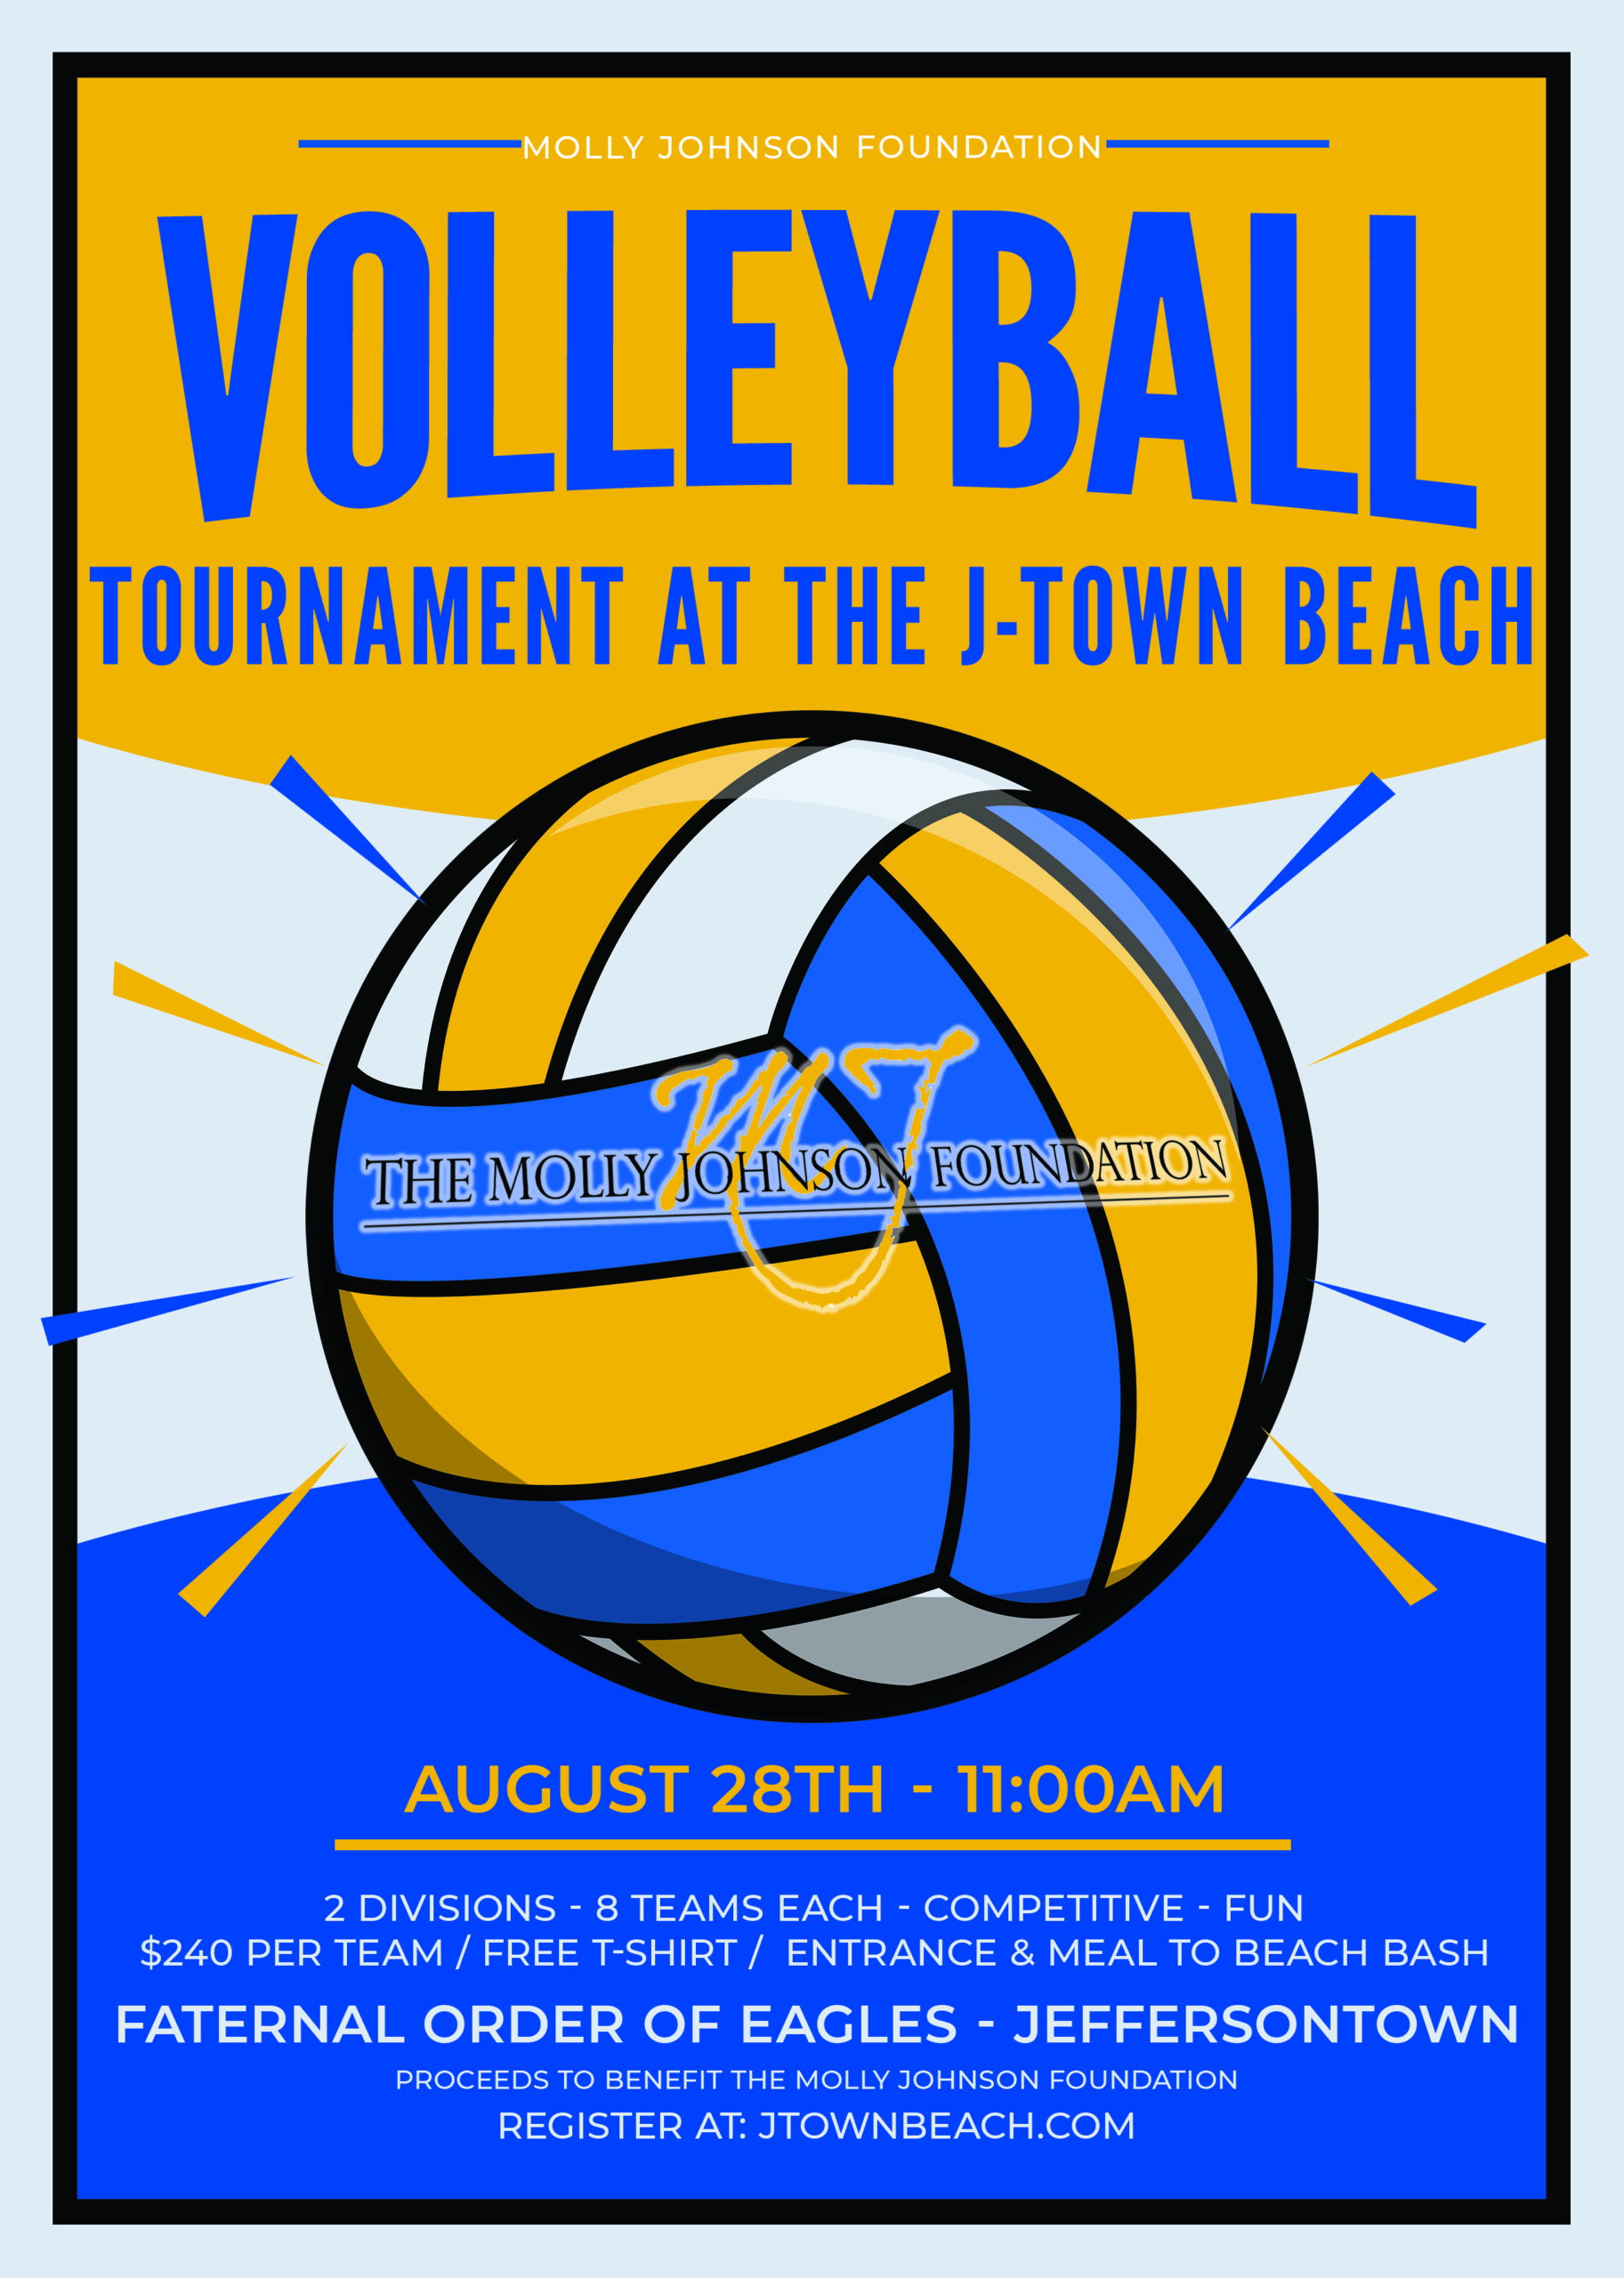 JTown Beach Volleyball – Molly Johnson Foundation